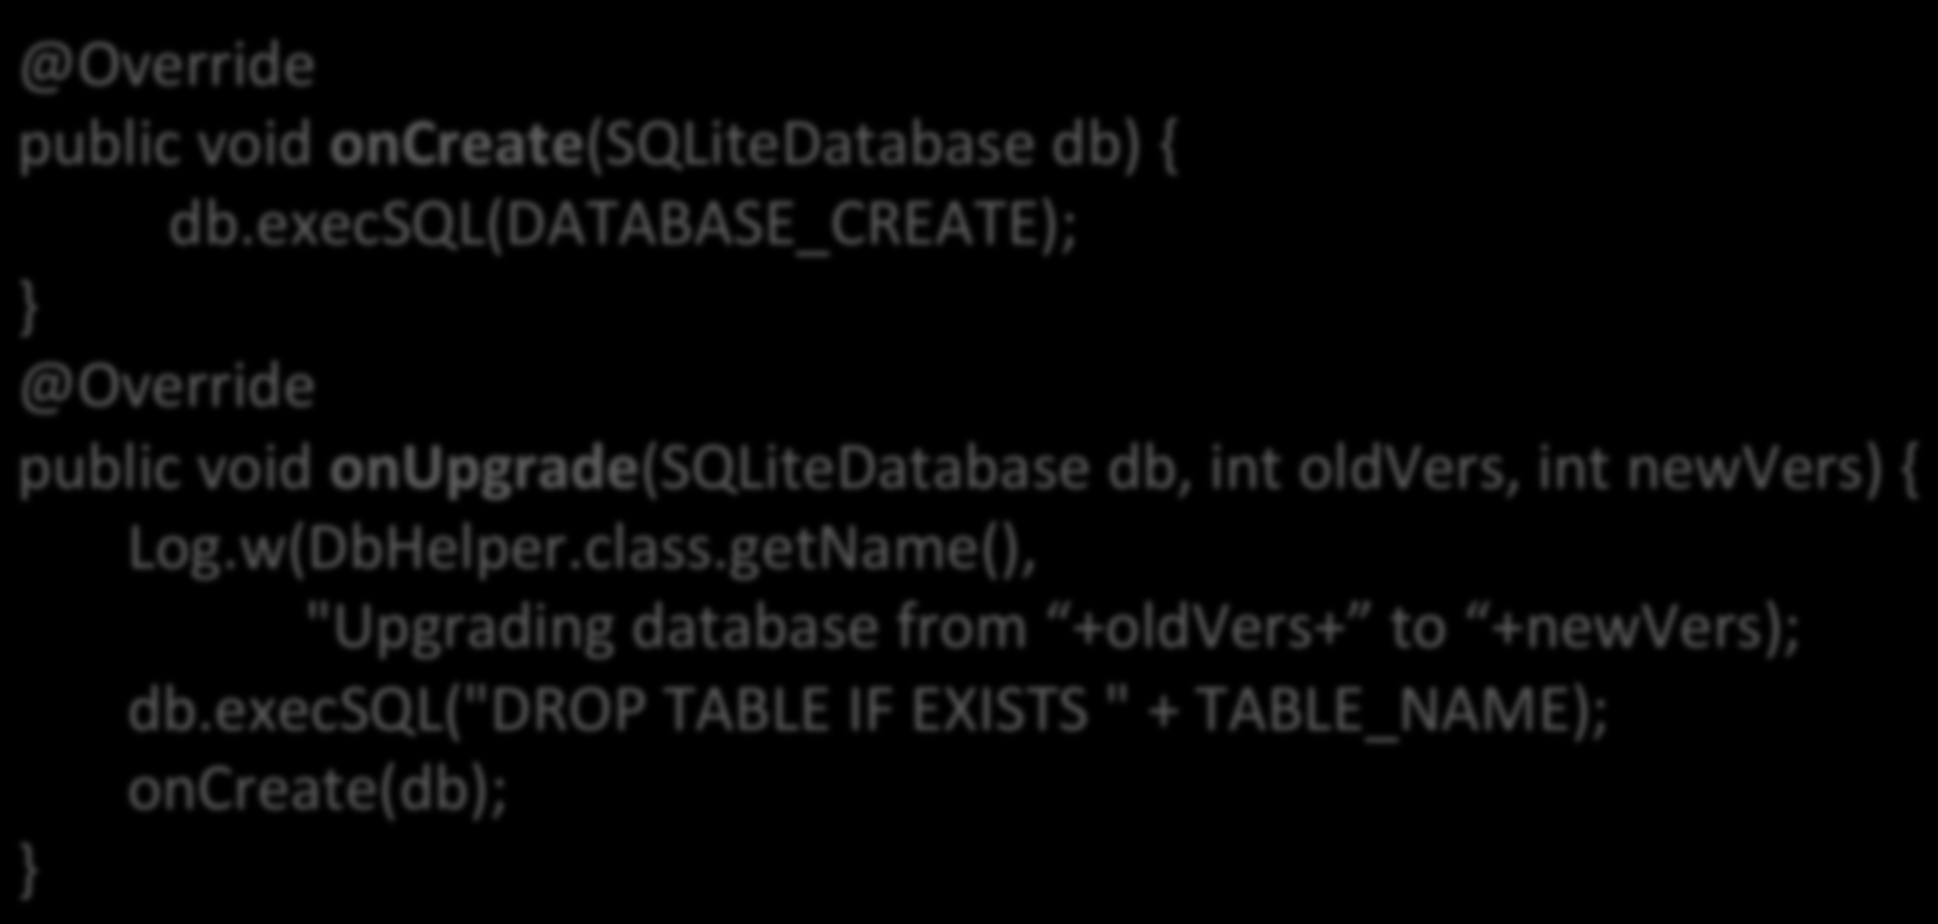 Passo- a- Passo 5) Definição dos métodos oncreate() e onupgrade() @Override public void oncreate(sqlitedatabase db) { db.